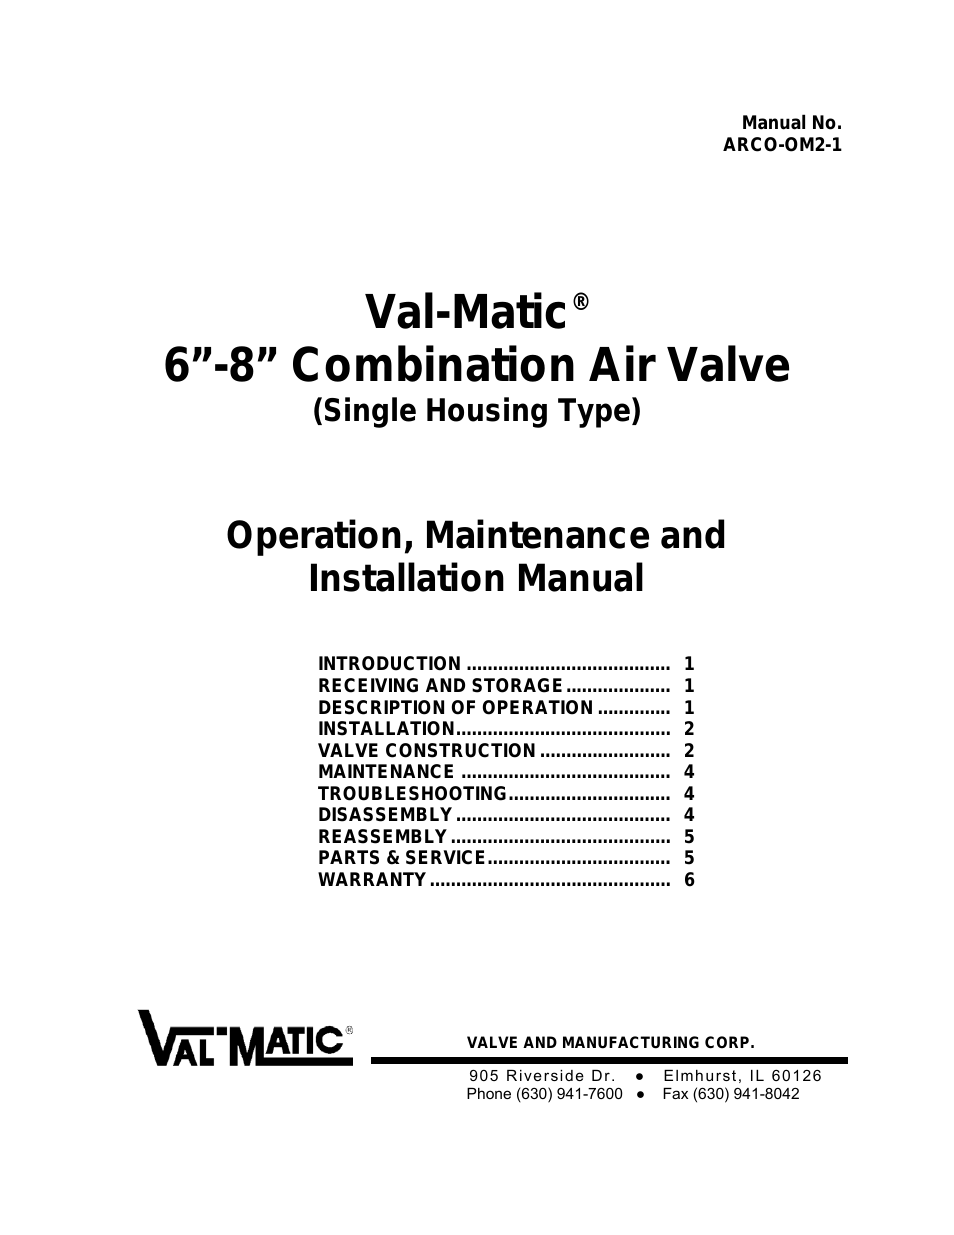 6-8 Combination Air Valve (Single Housing Type)